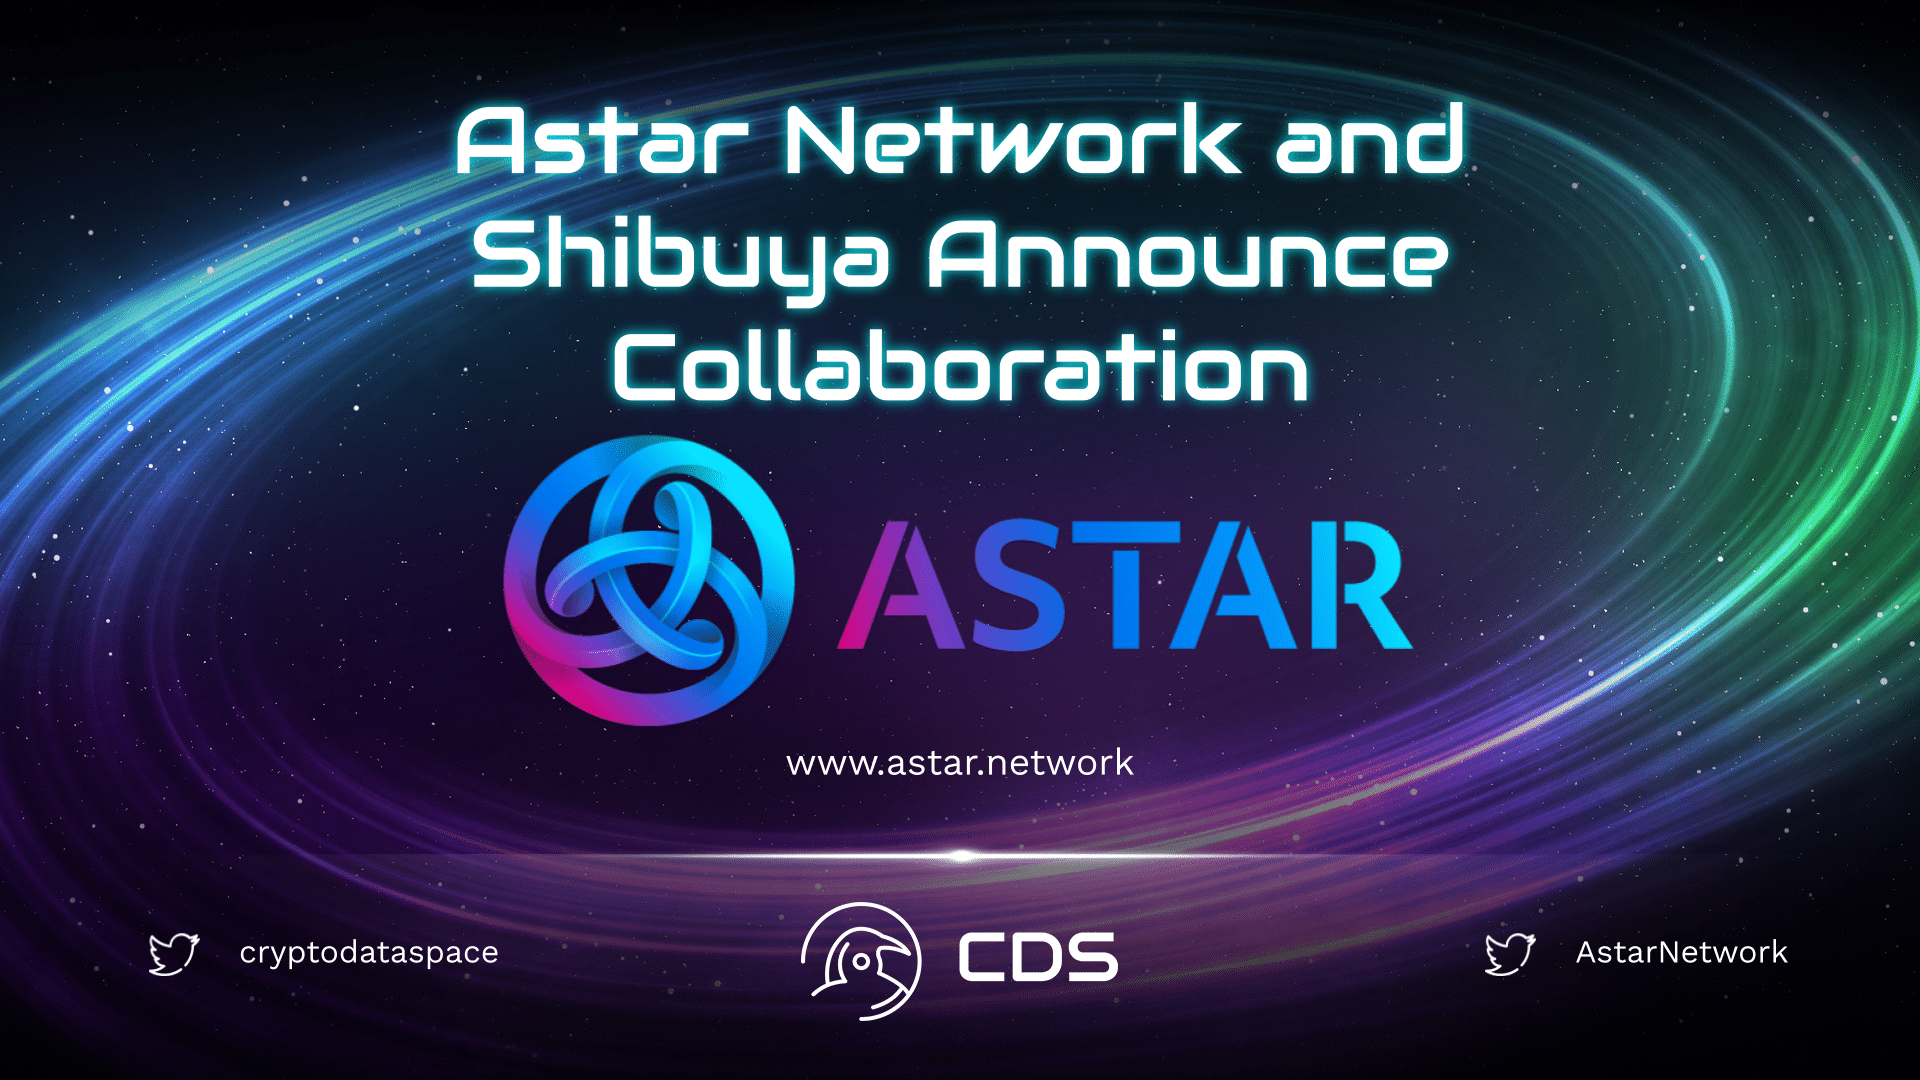 Astar Network and Shibuya Announce Collaboration